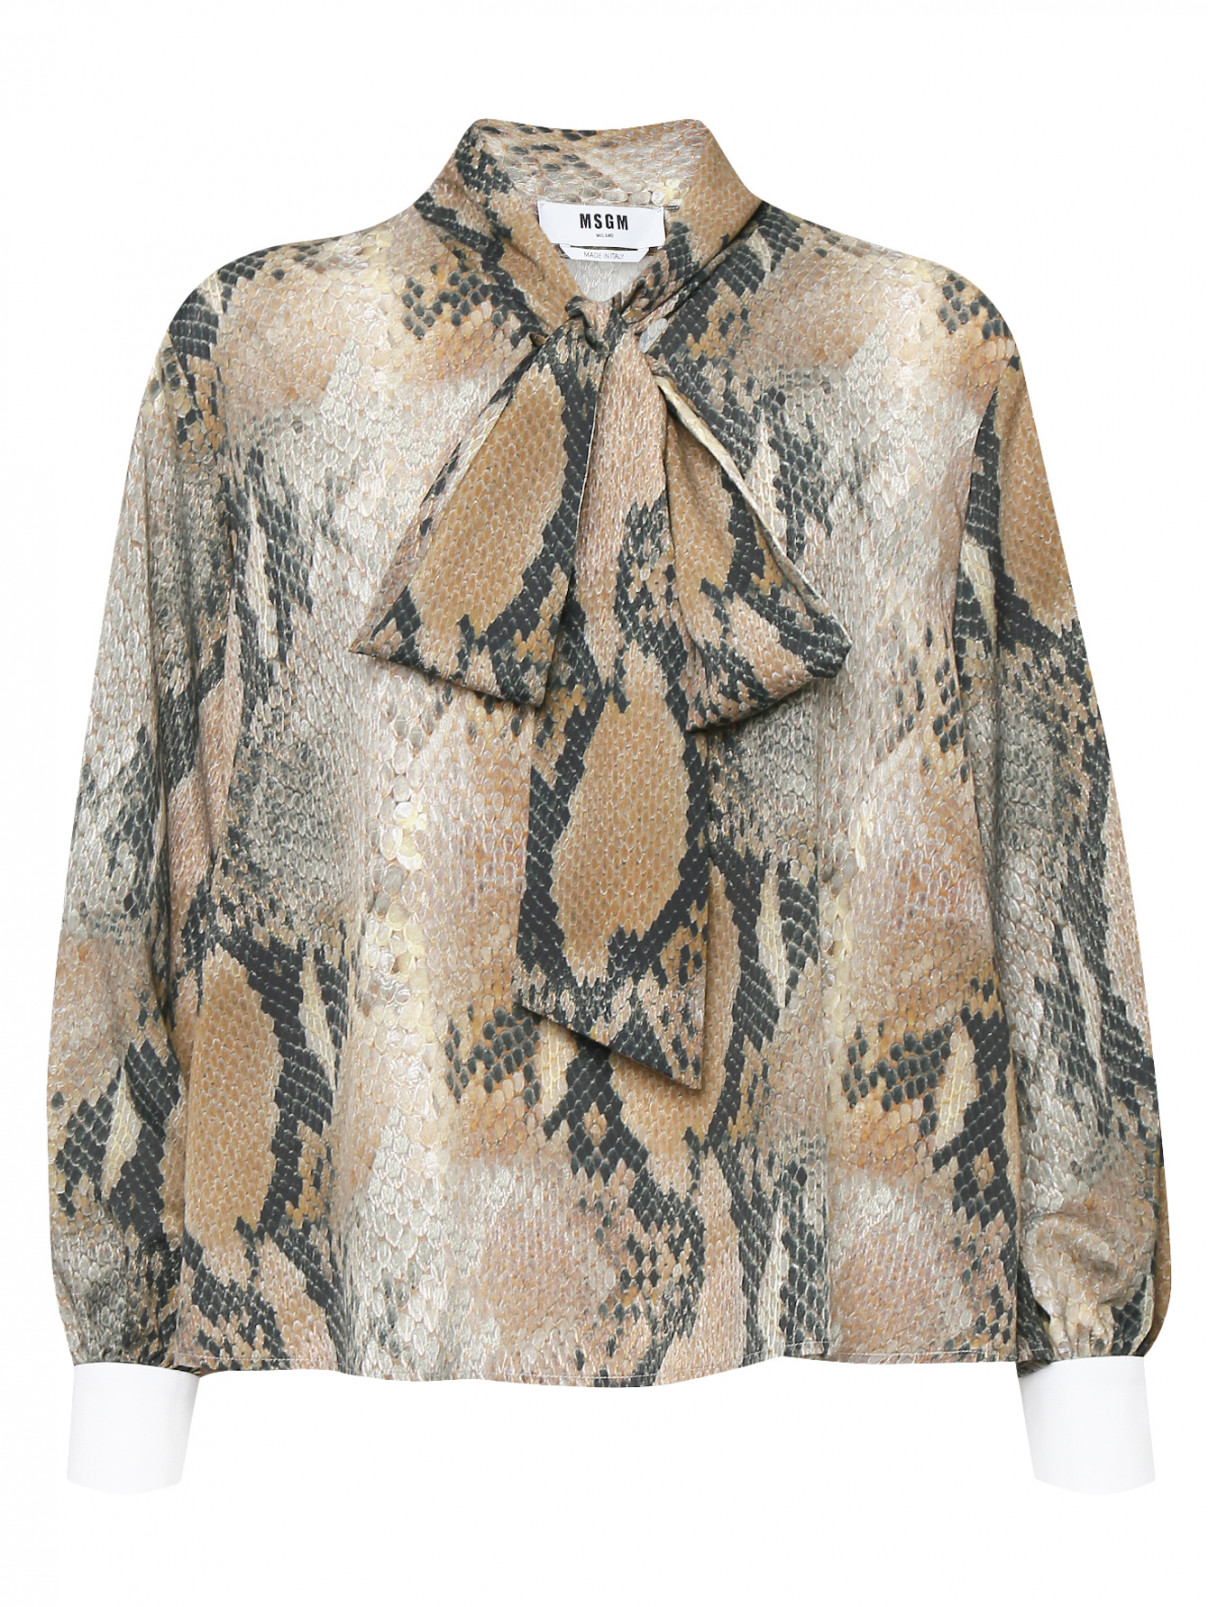 Блуза свободного кроя с узором MSGM  –  Общий вид  – Цвет:  Узор